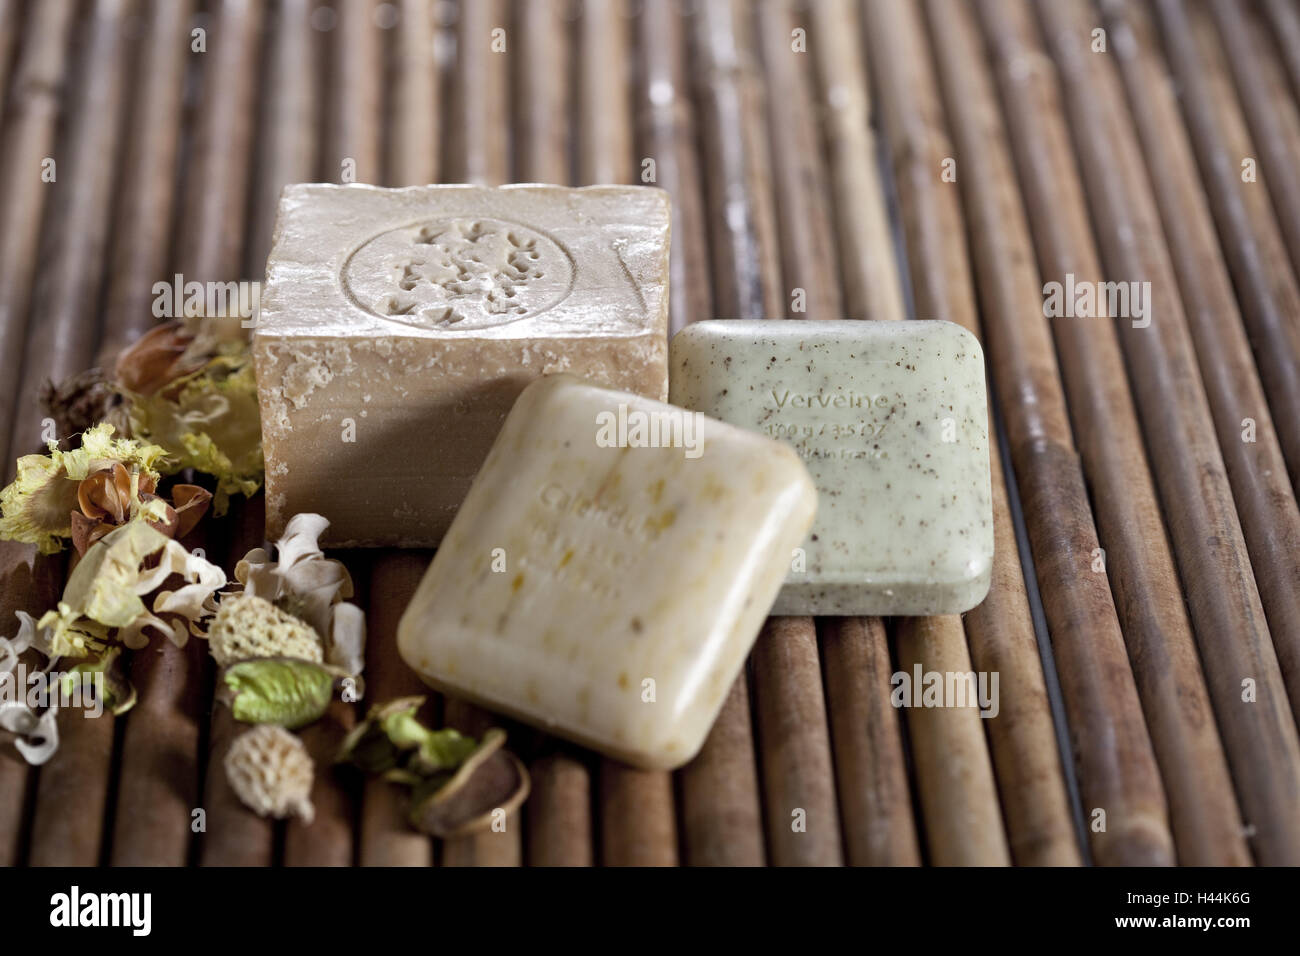 Precious soaps, Stock Photo